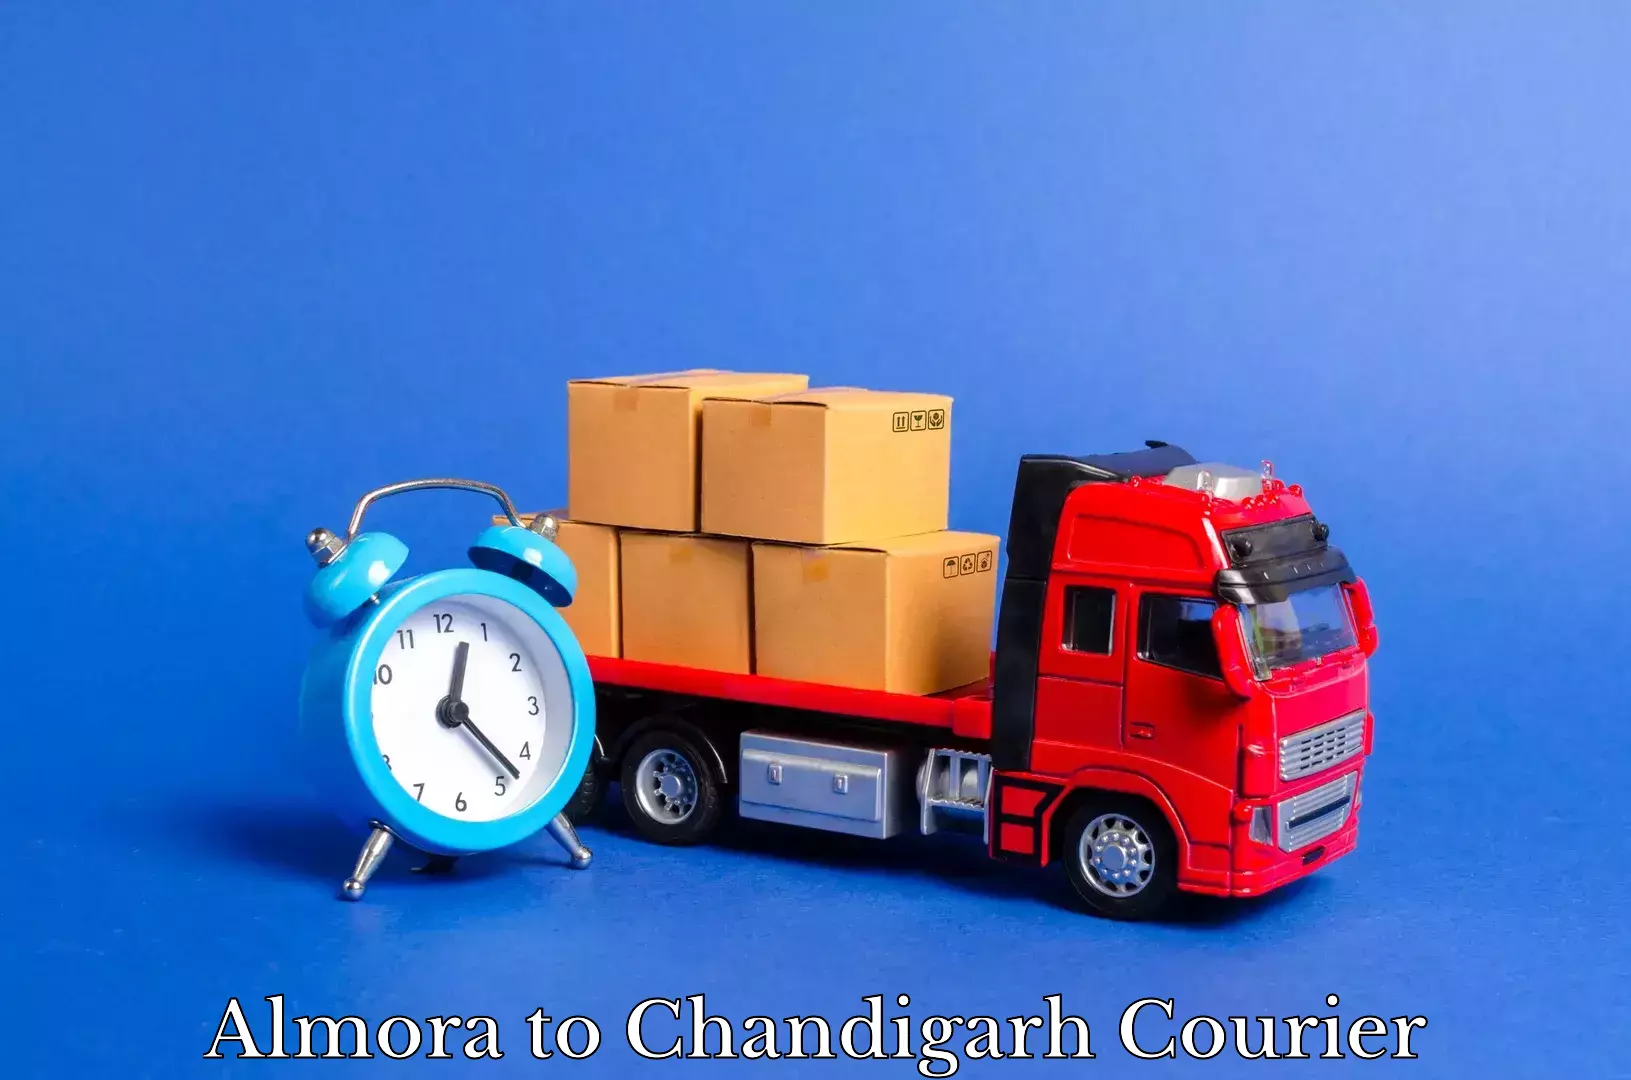 Professional moving company Almora to Chandigarh